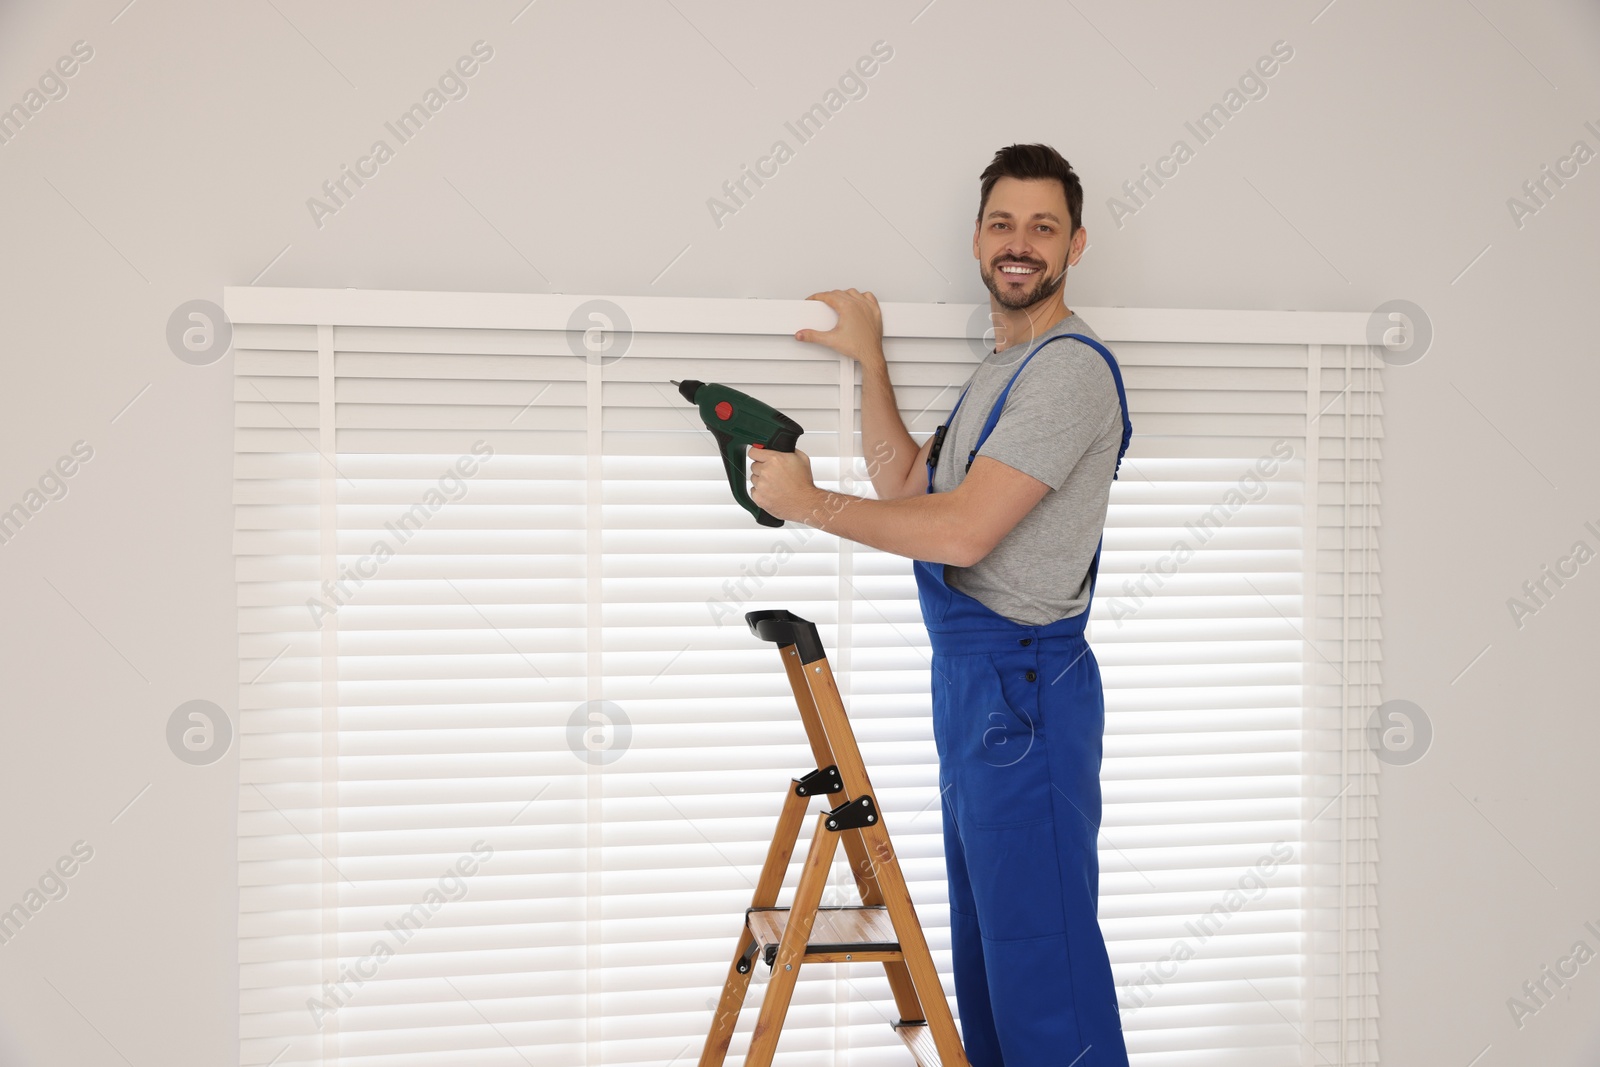 Photo of Worker in uniform installing window blind on stepladder indoors